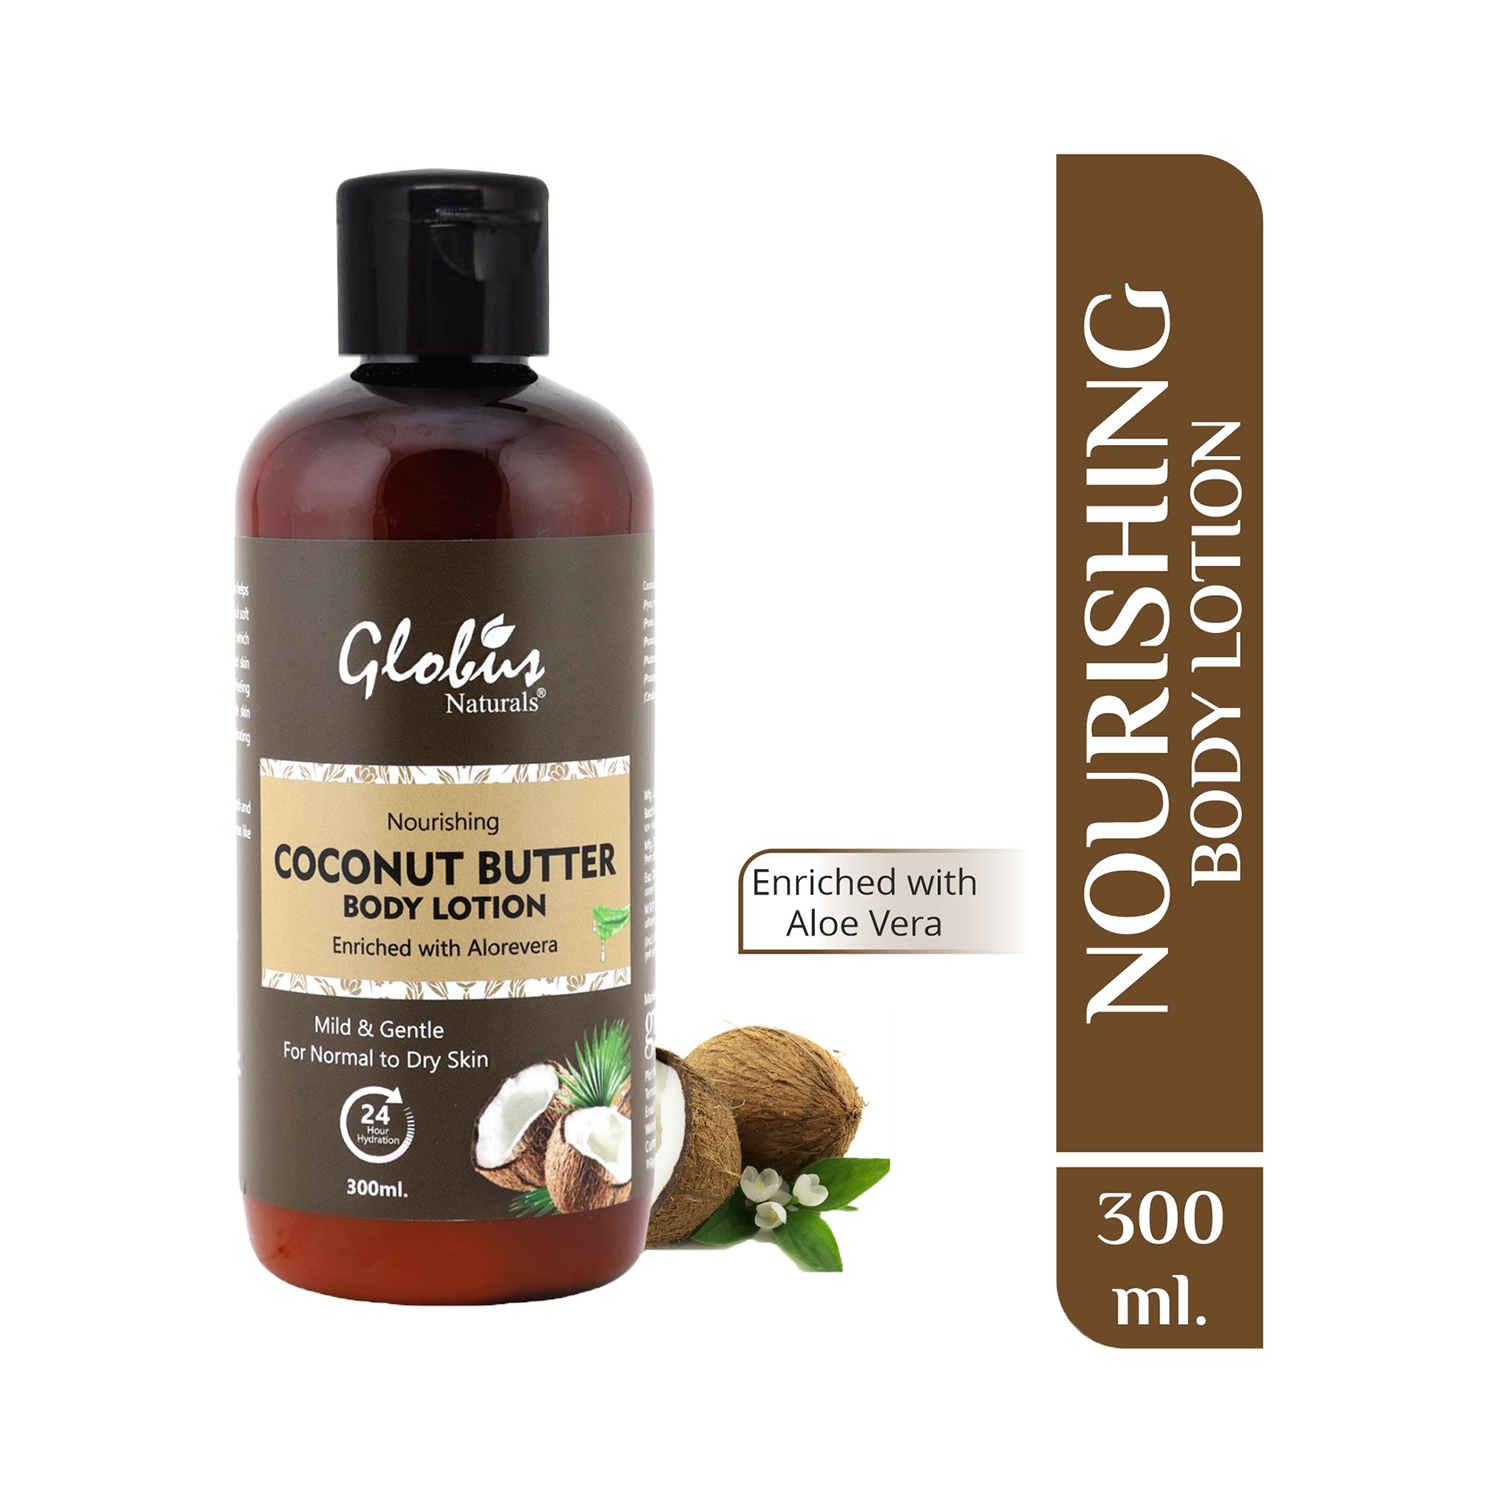 Globus Naturals | Globus Naturals Nourishing Coconut Butter Body Lotion (300ml)